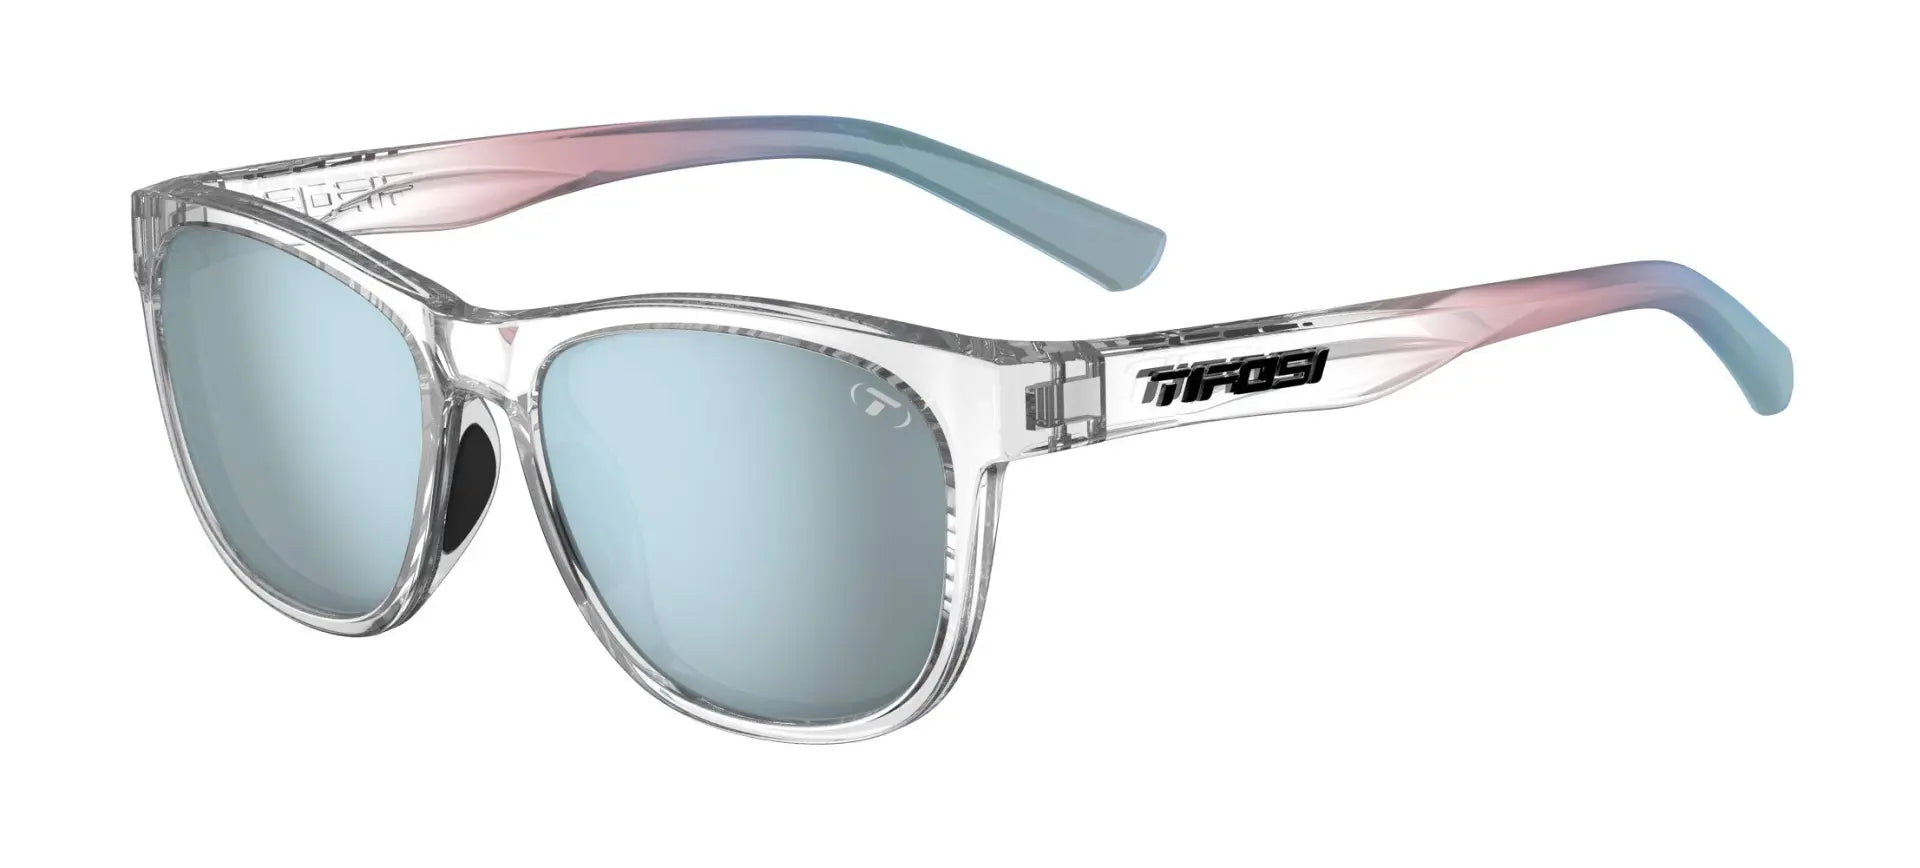 Tifosi Optics SWANK Sunglasses Avant Clear / Smoke Tint with Bright Blue Mirror